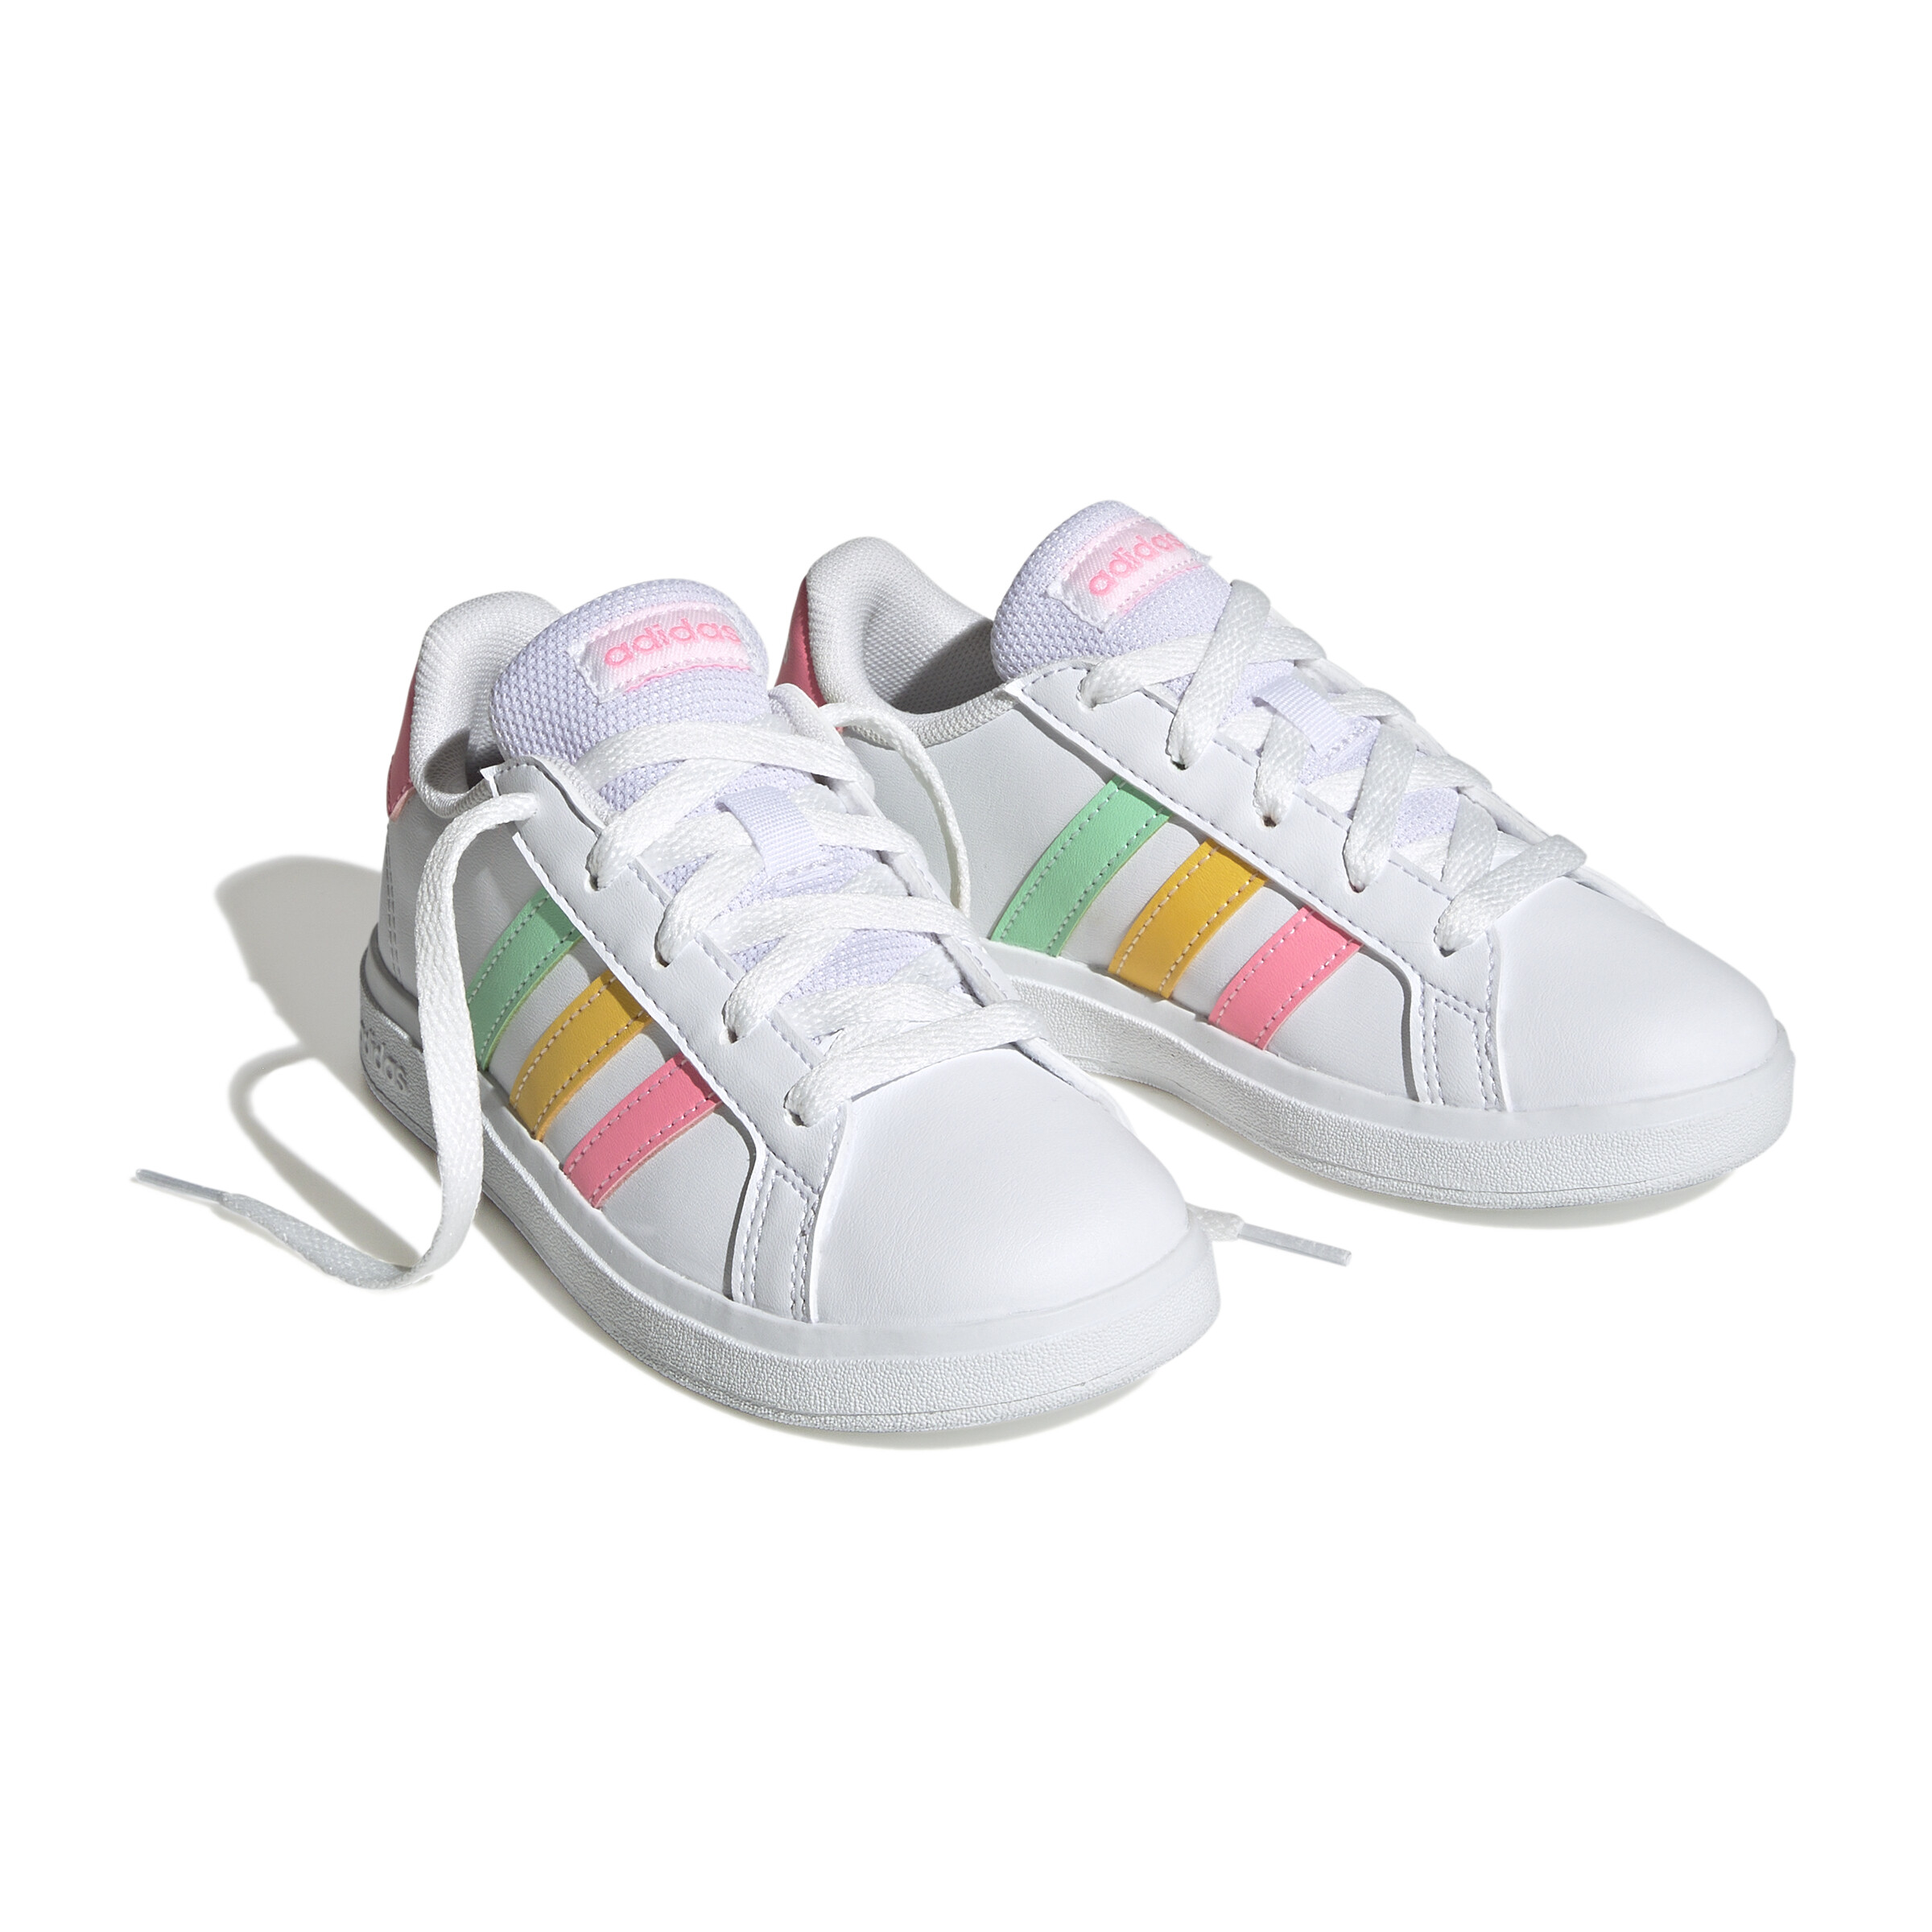 Incaltaminte Fete adidas Grand Court 20 (Little KidBig Kid) Footwear WhitePulse MintBeam Pink